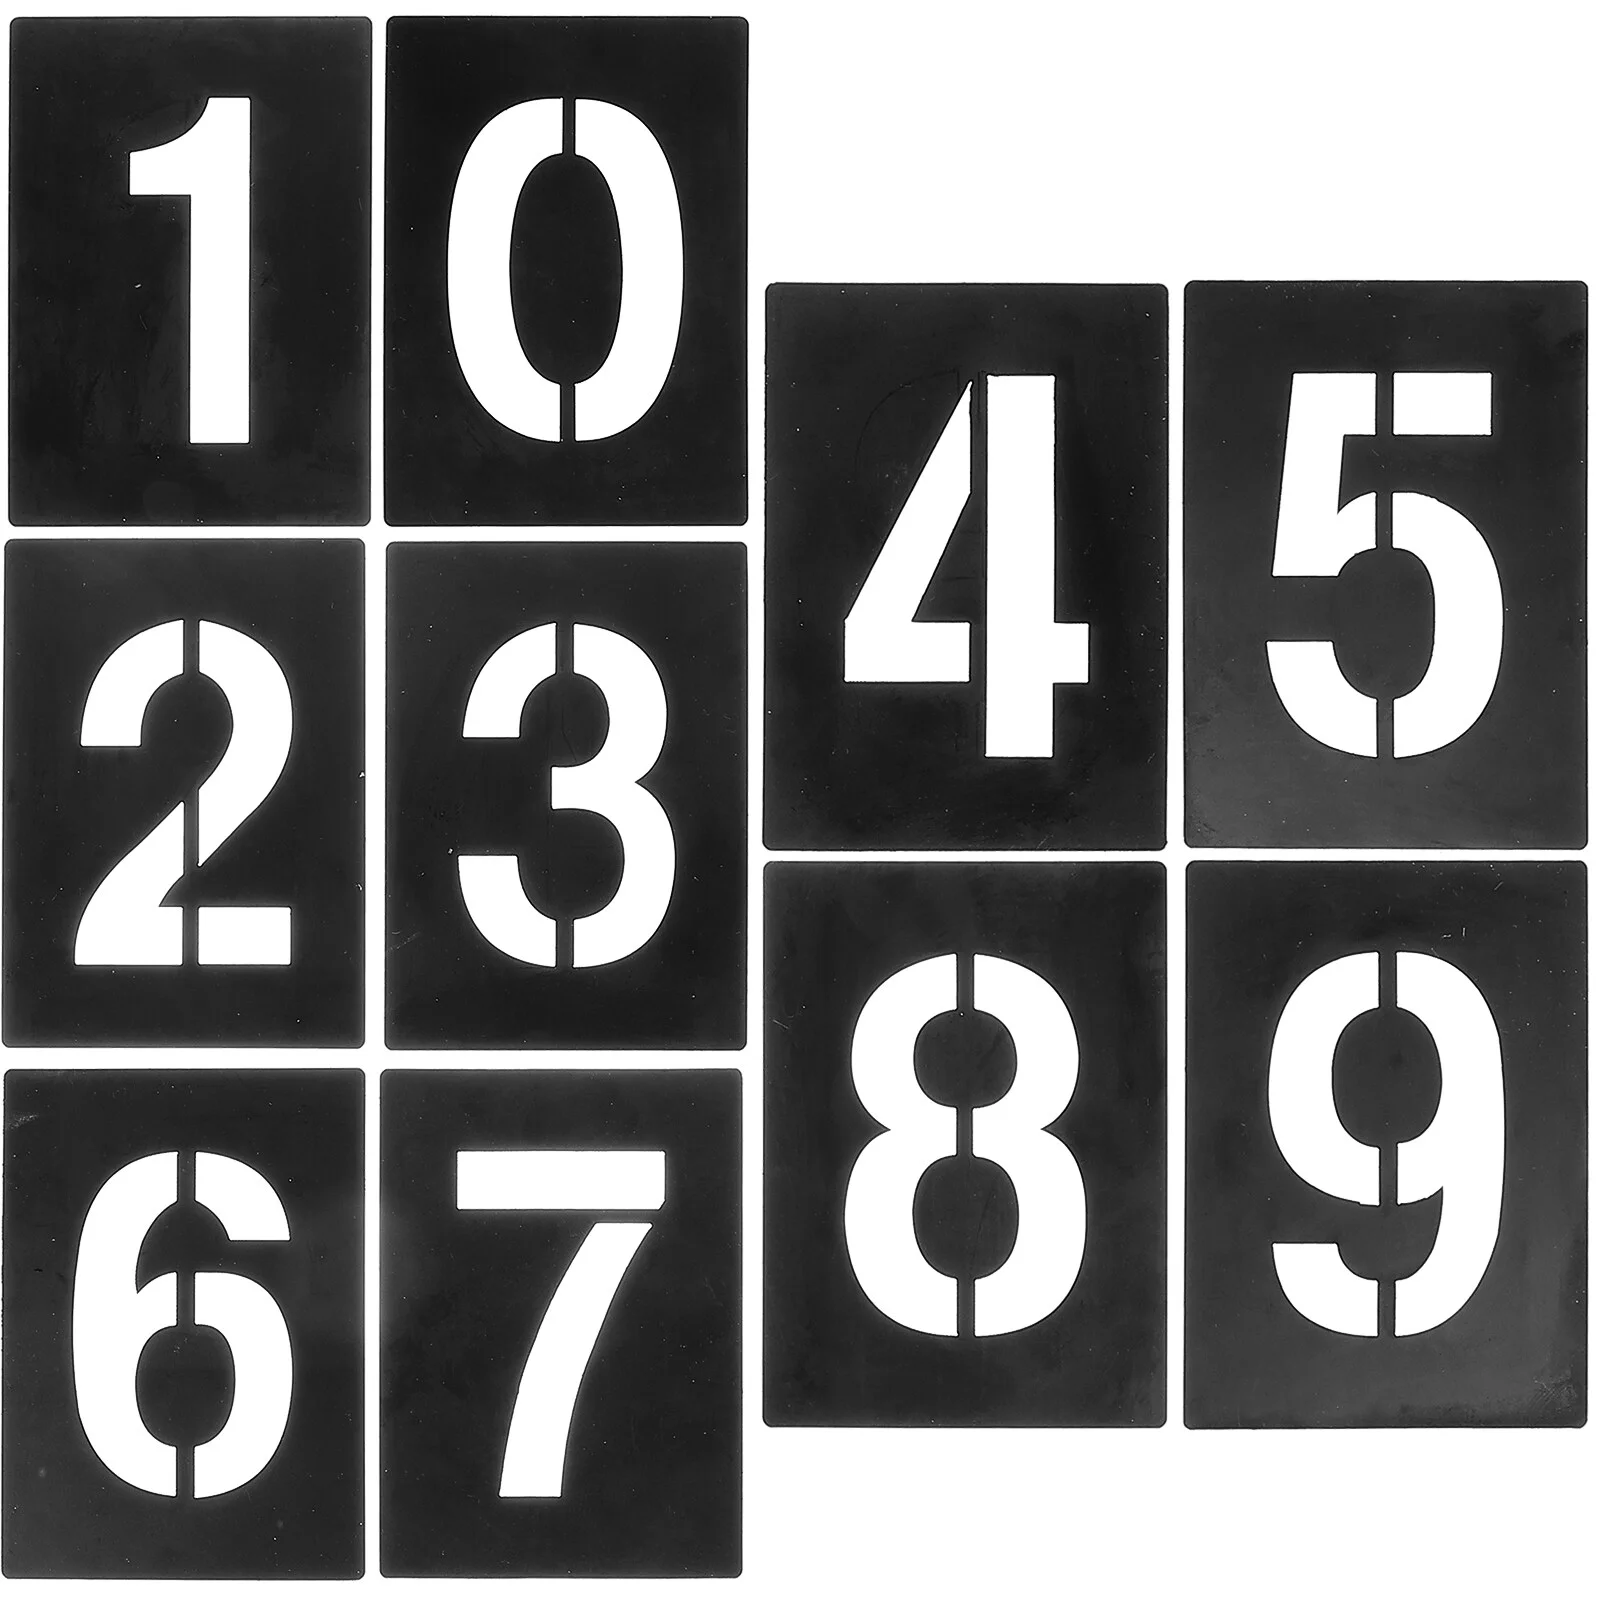 

Шаблон слов шаблон номер шаблон трафареты картина Письмо Дерево каллиграфия ПВХ Многоразовые номера 0-9 ткань